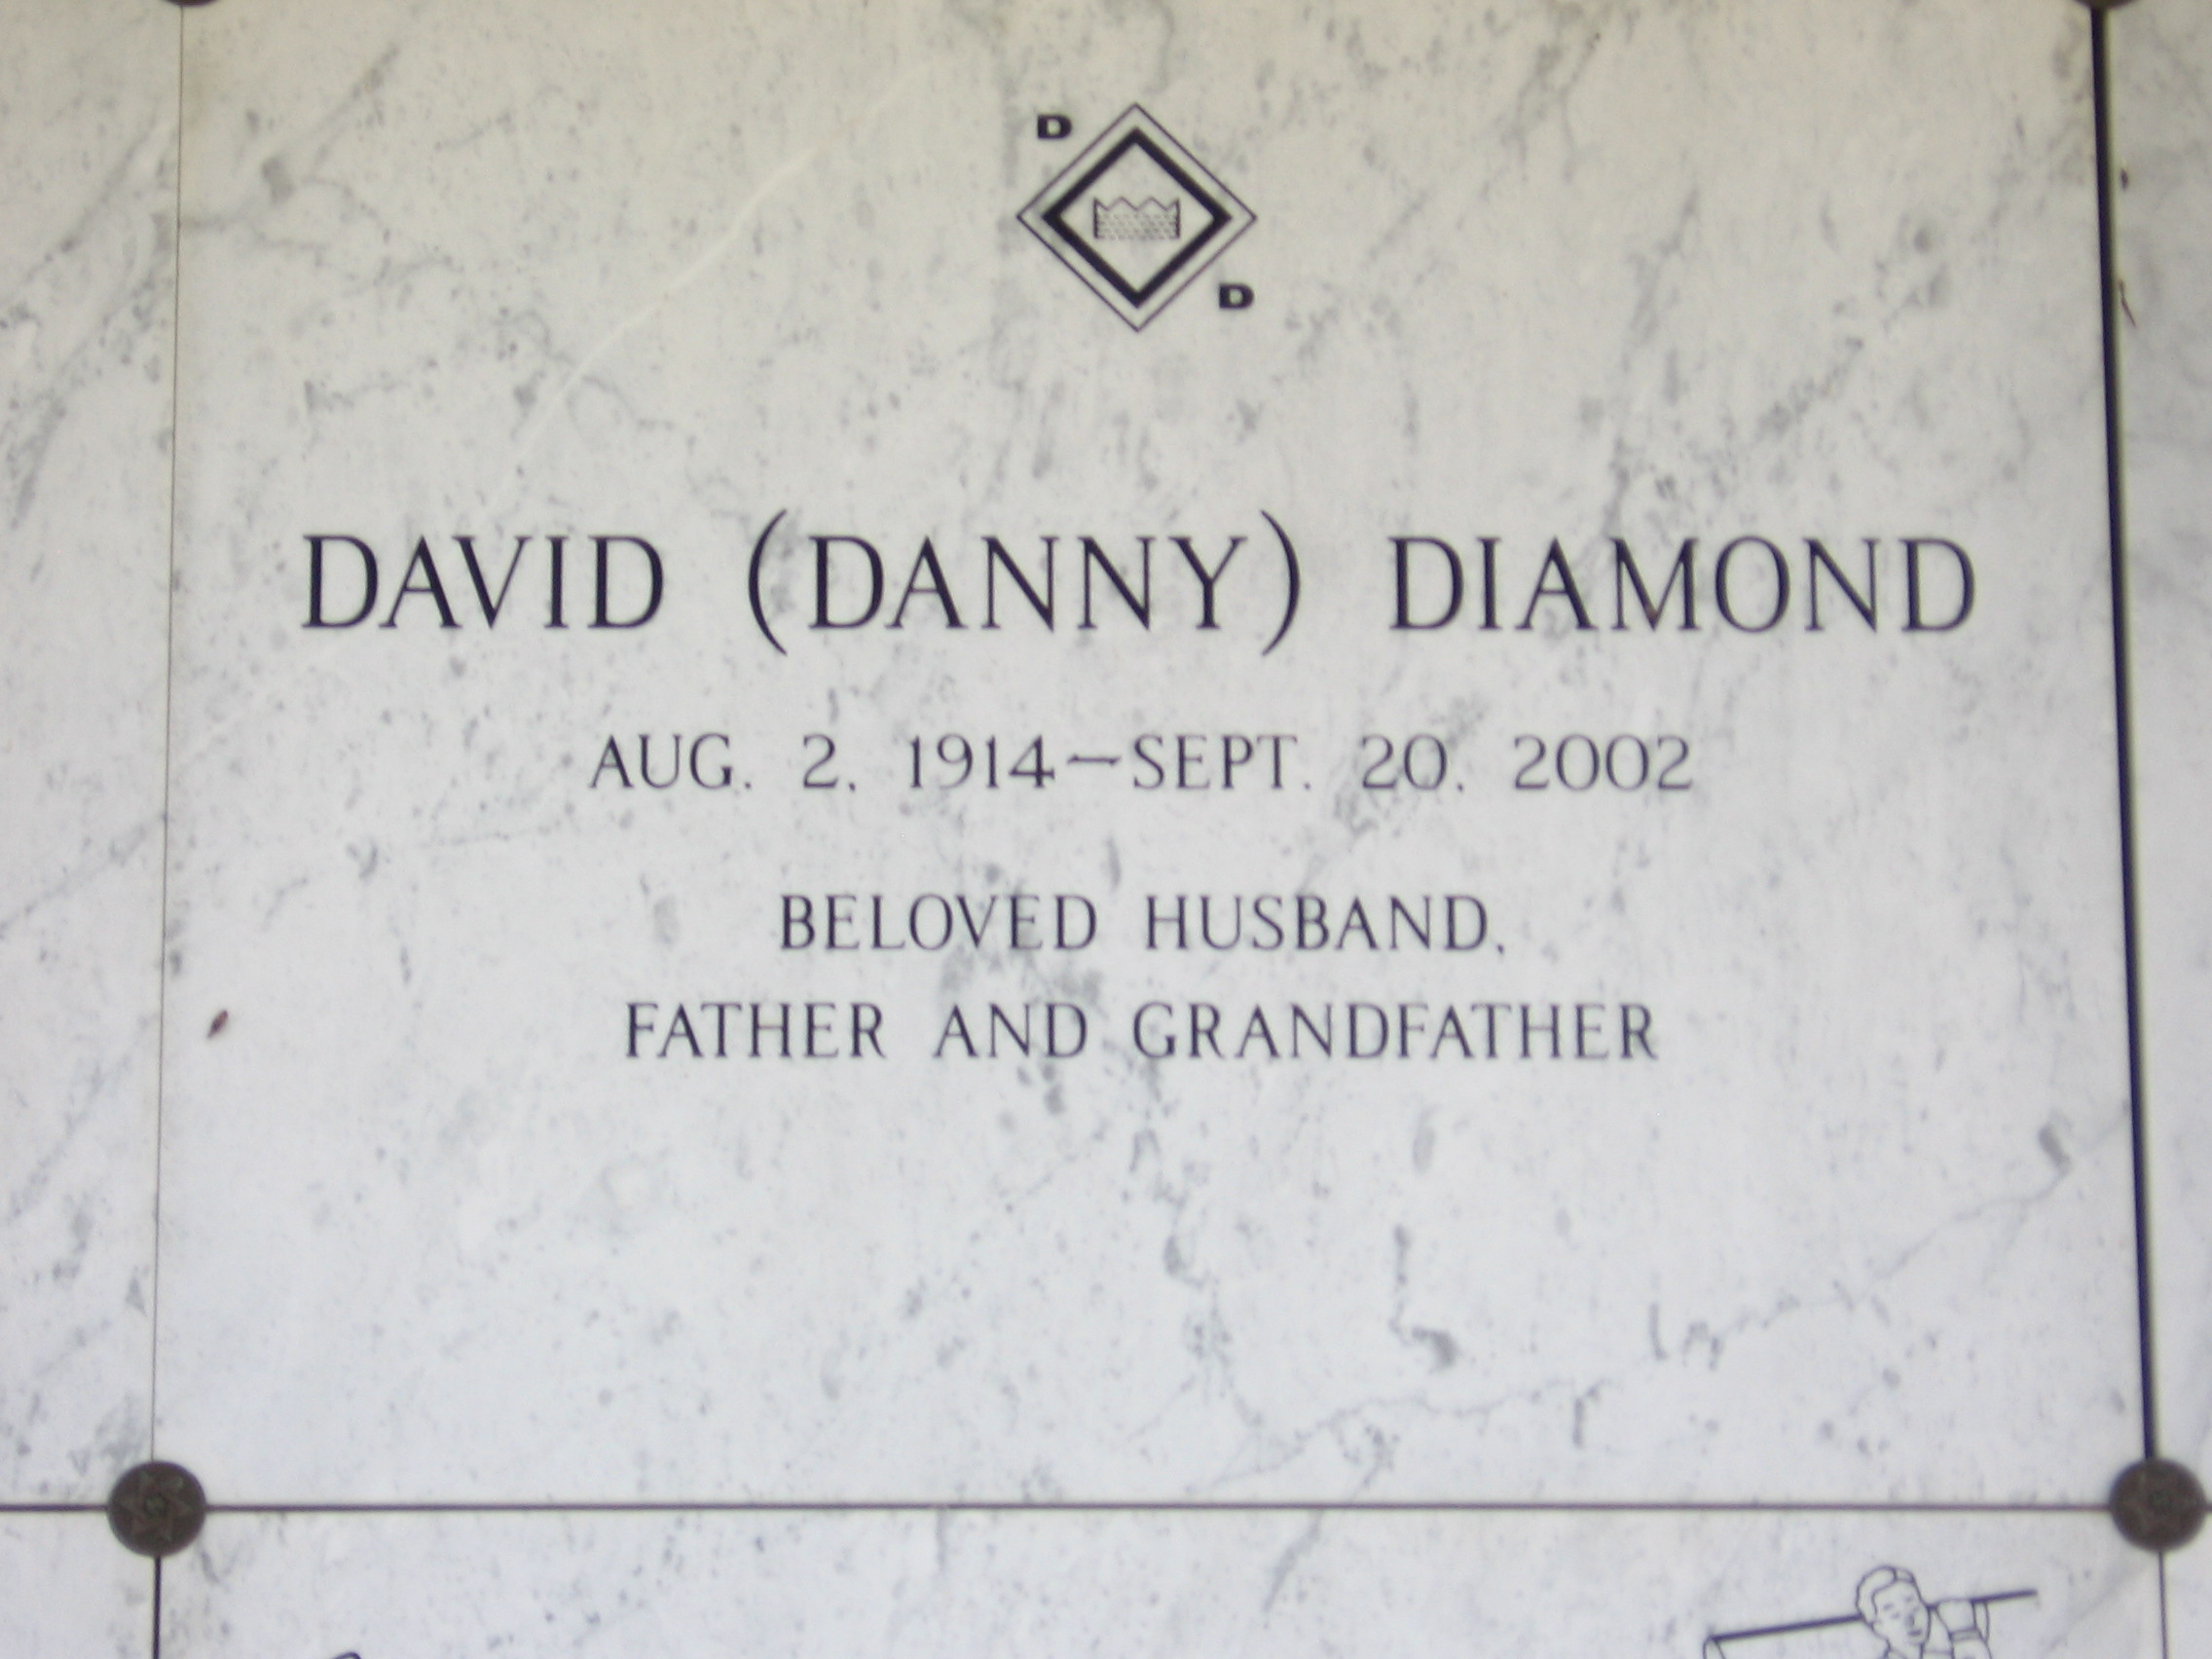 David "Danny" Diamond